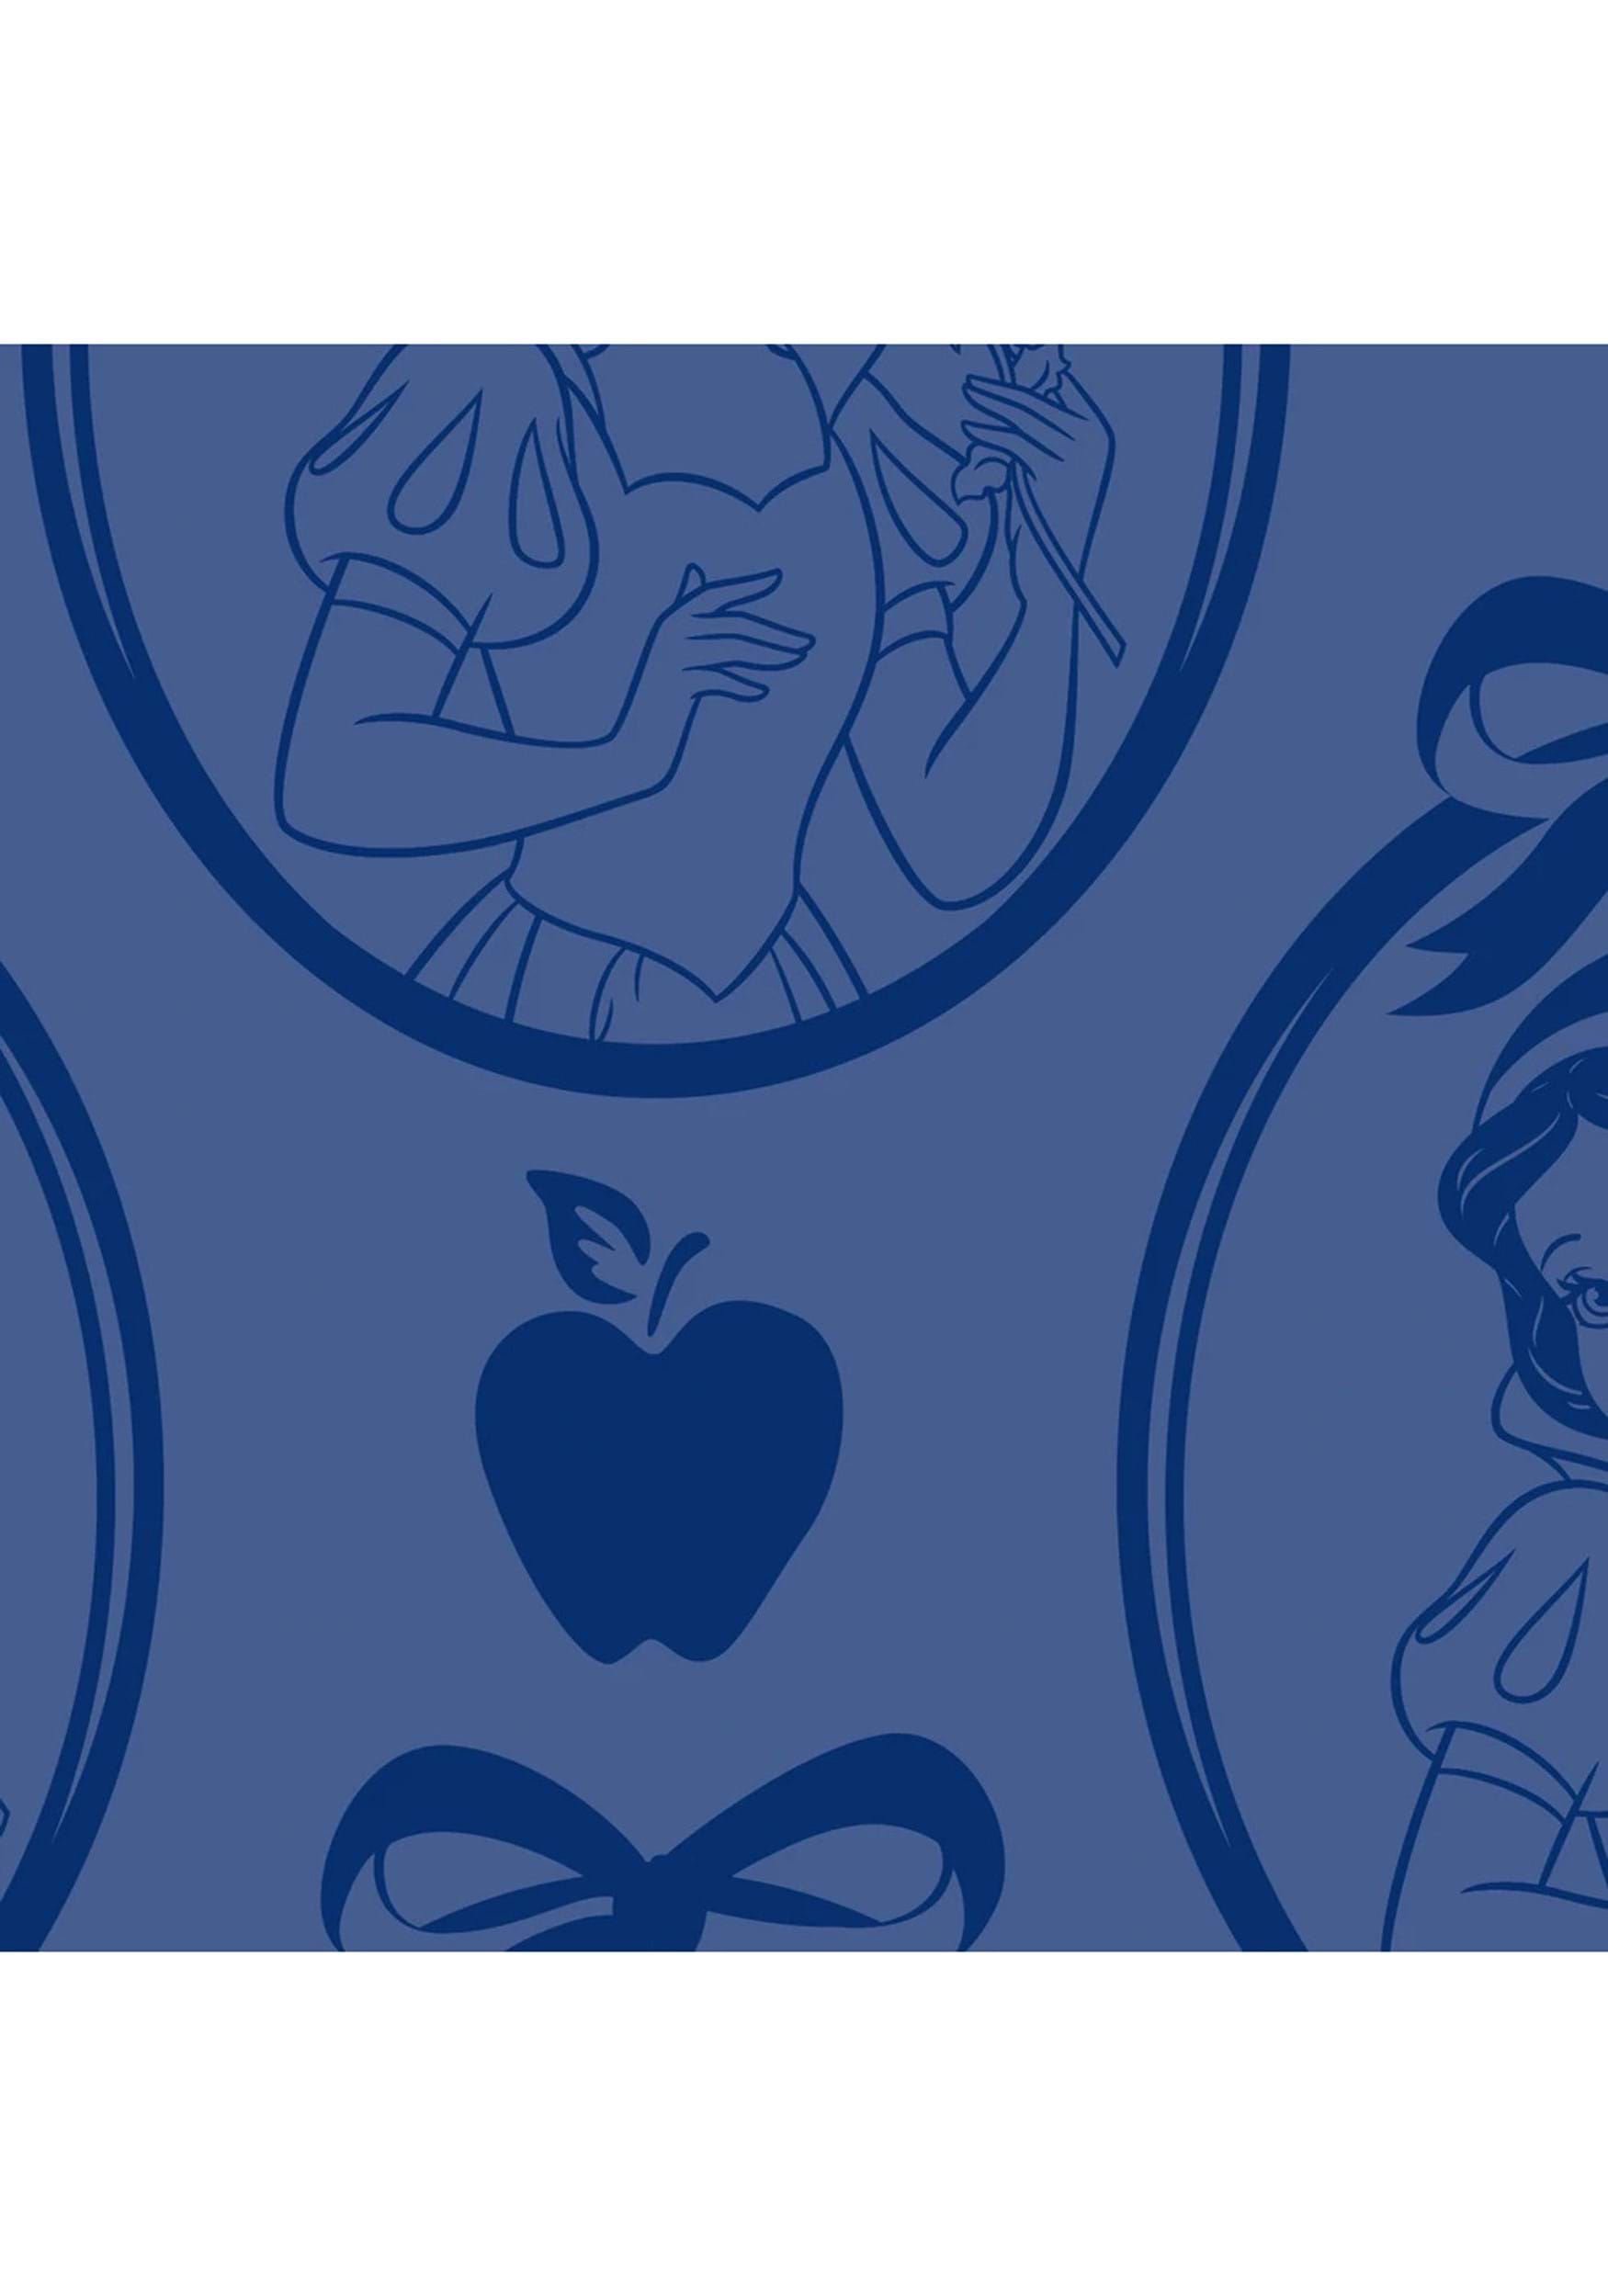 Loungefly Disney Snow White & the Seven Dwarfs Scenes Mini